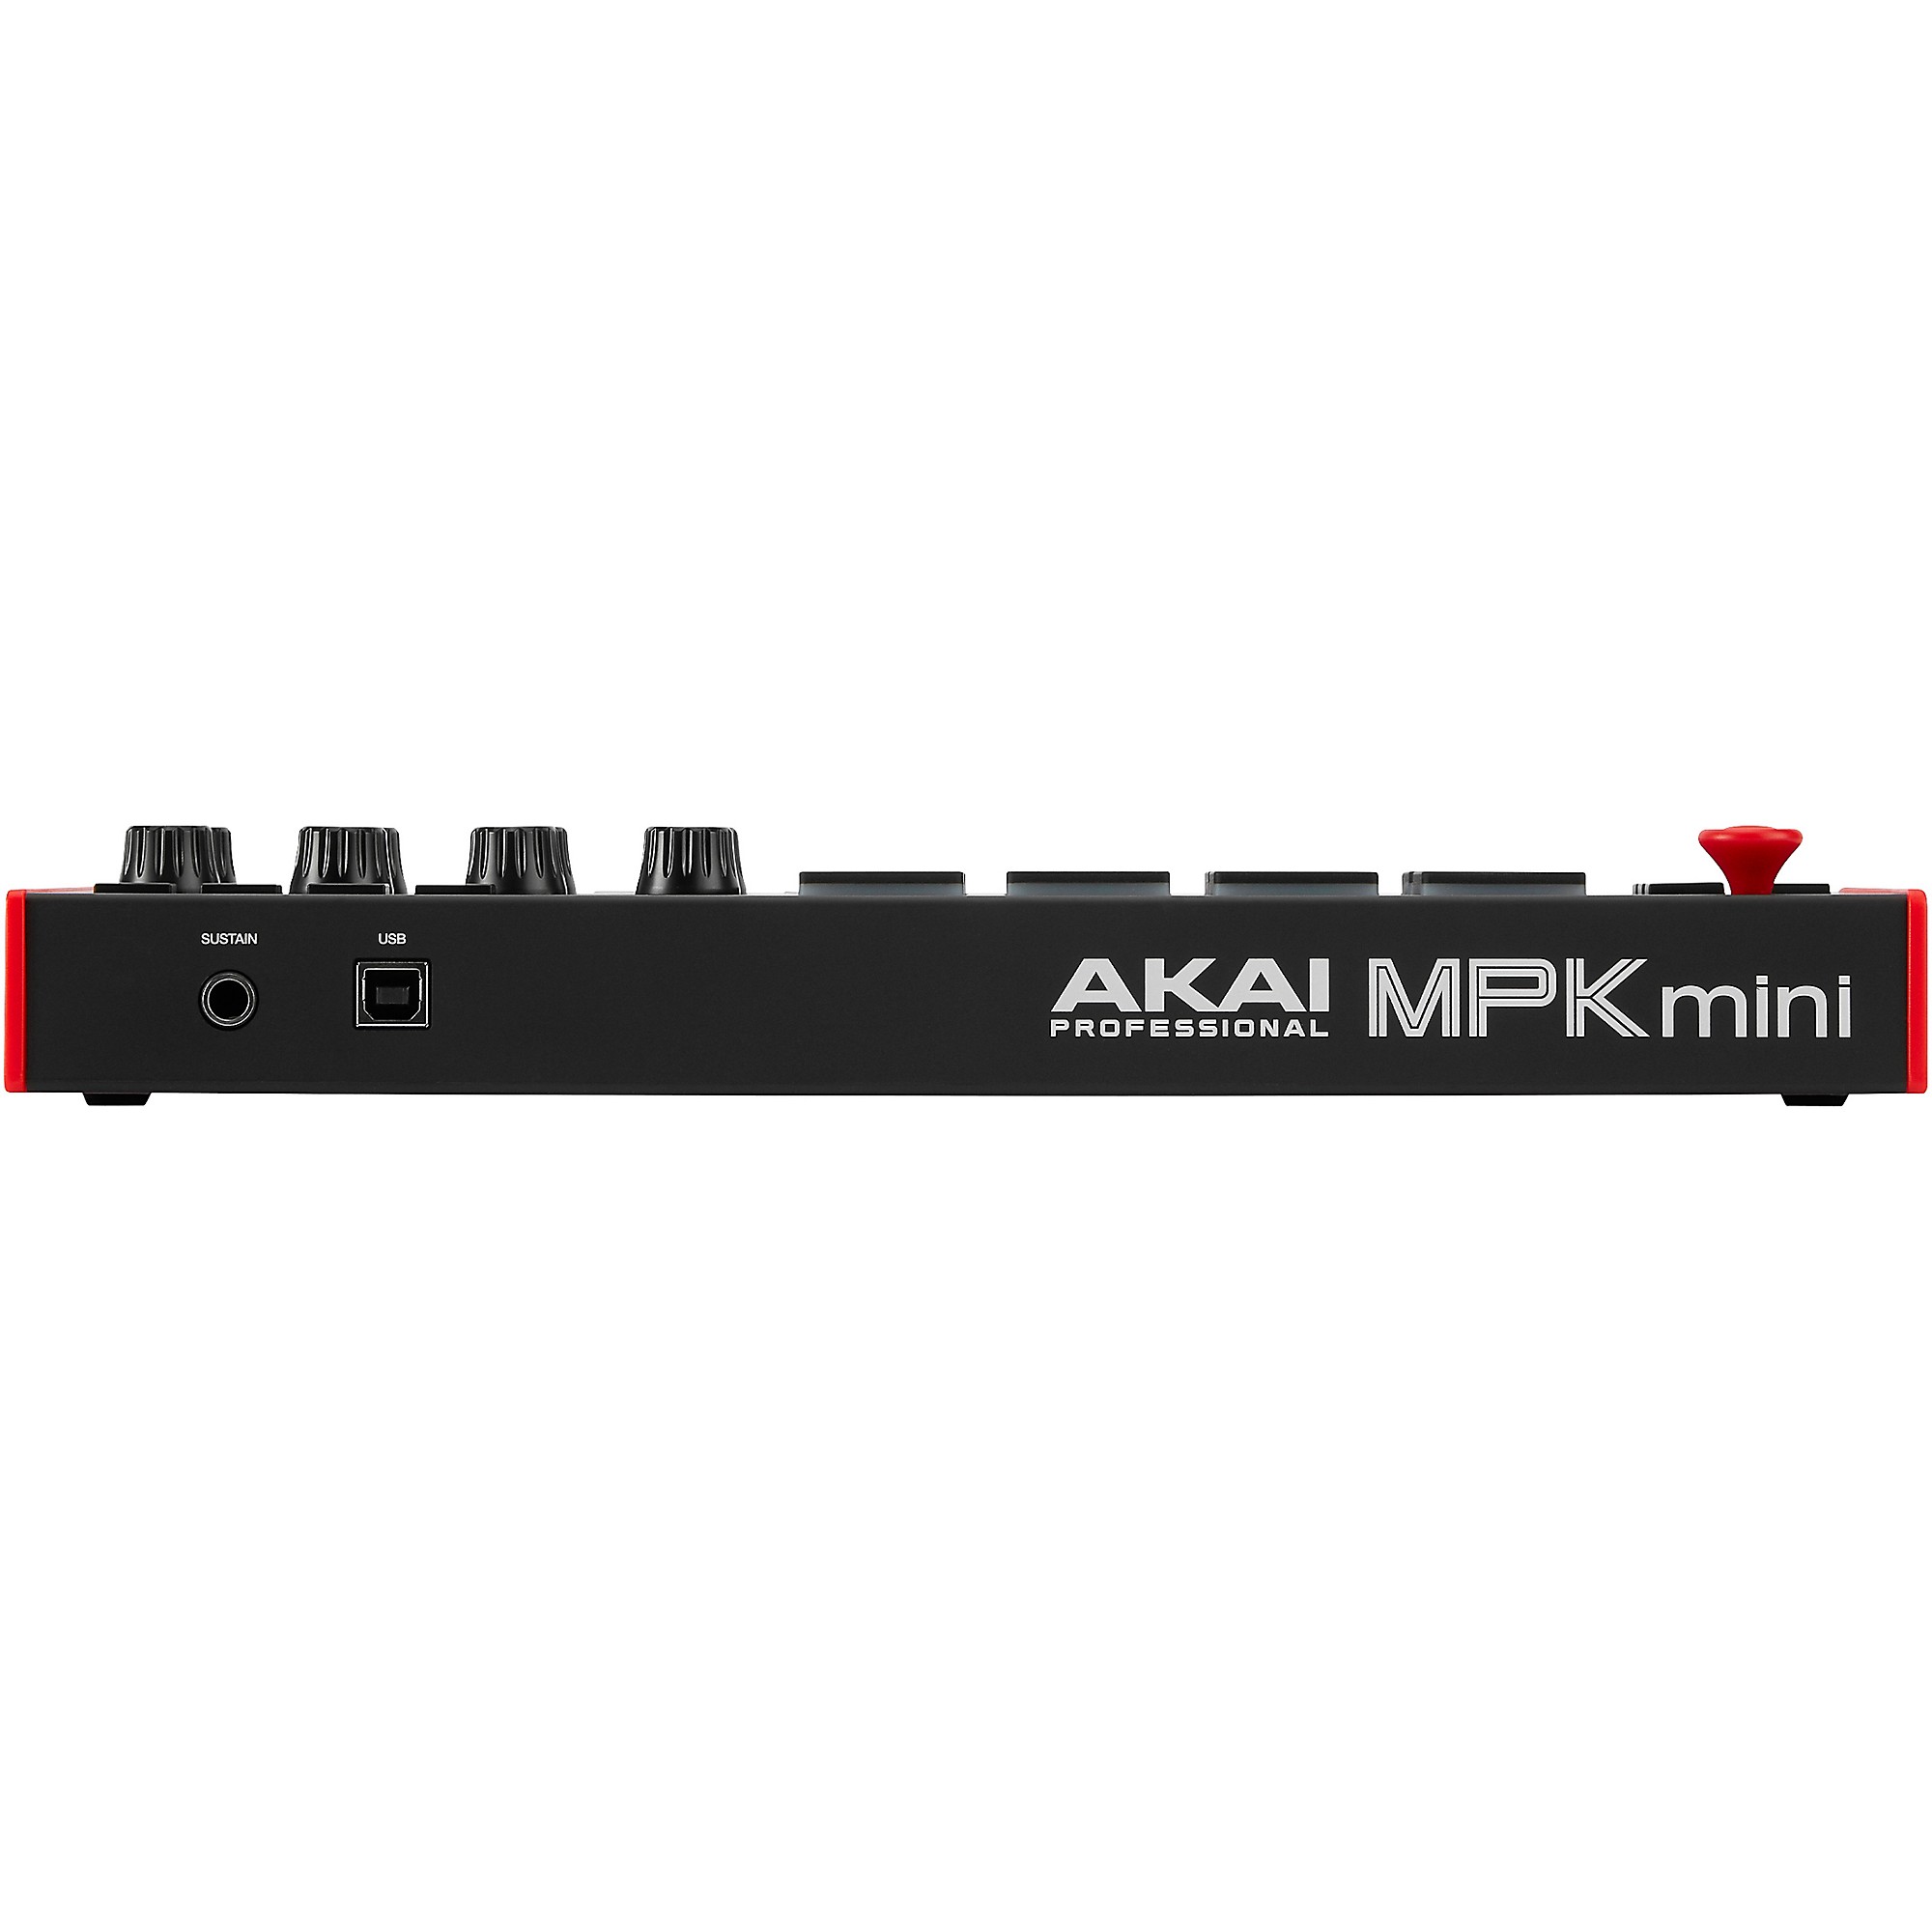 Akai Professional MPK mini mk3 Keyboard Controller Black | Guitar